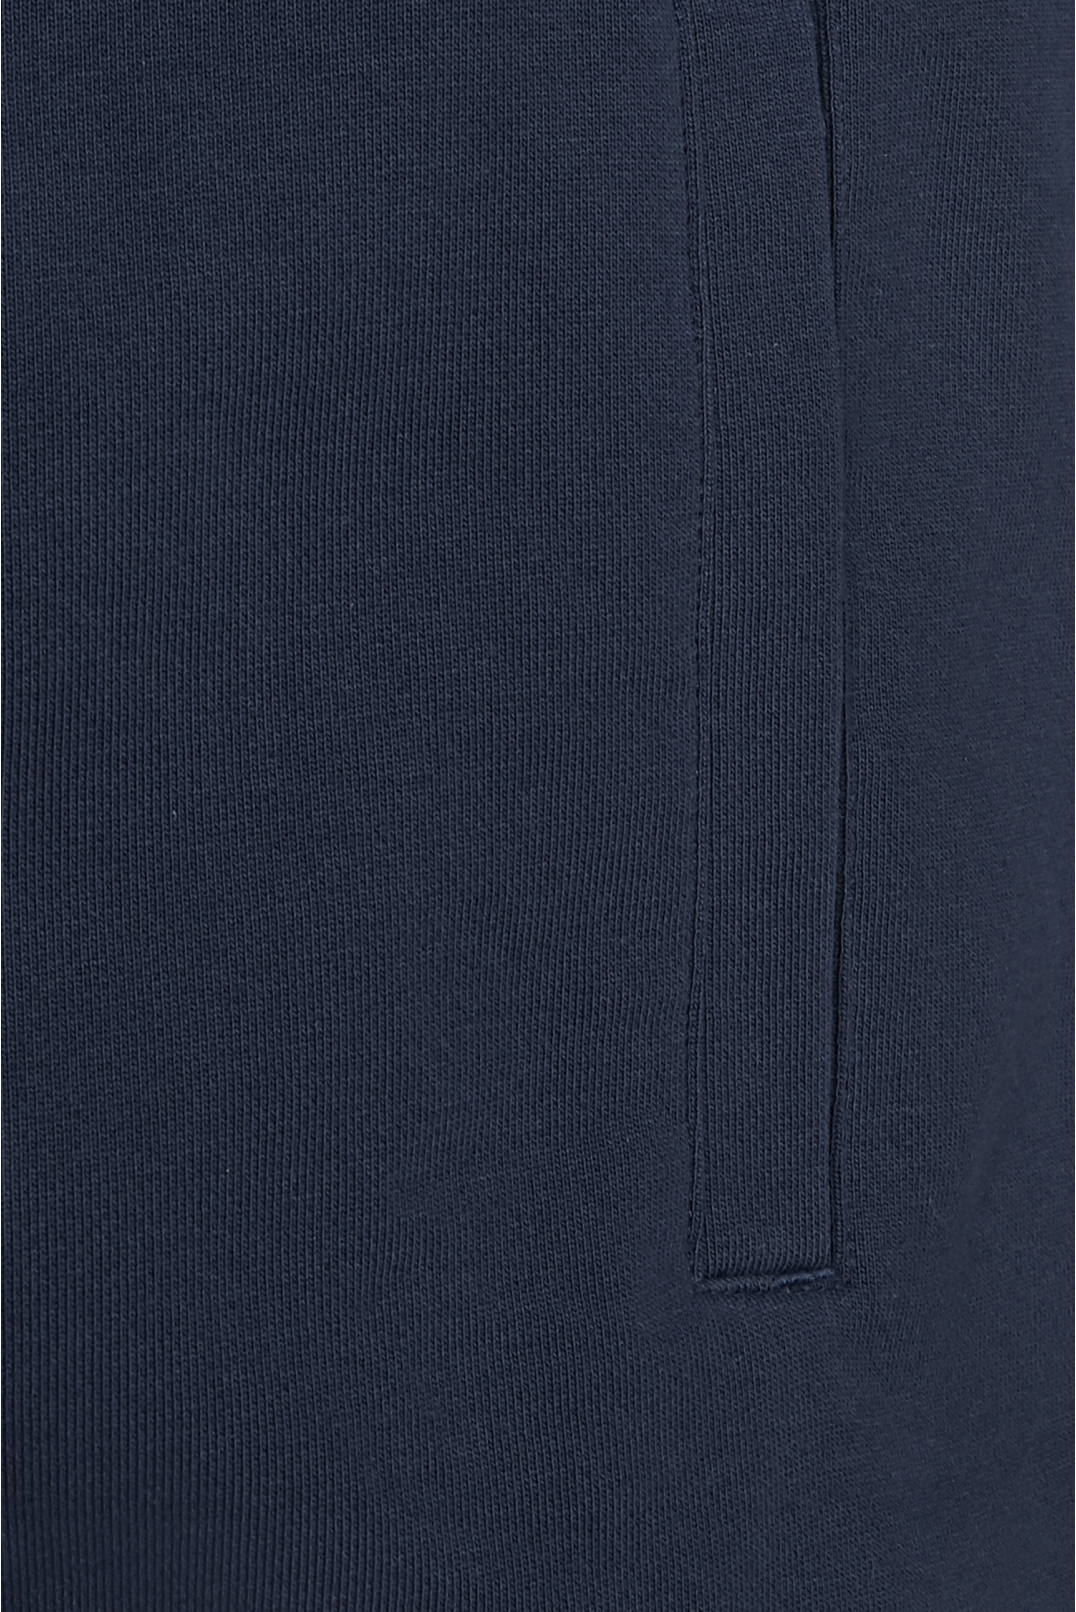 Мужской темно-синий спортивный костюм (кофта, брюки) - 3